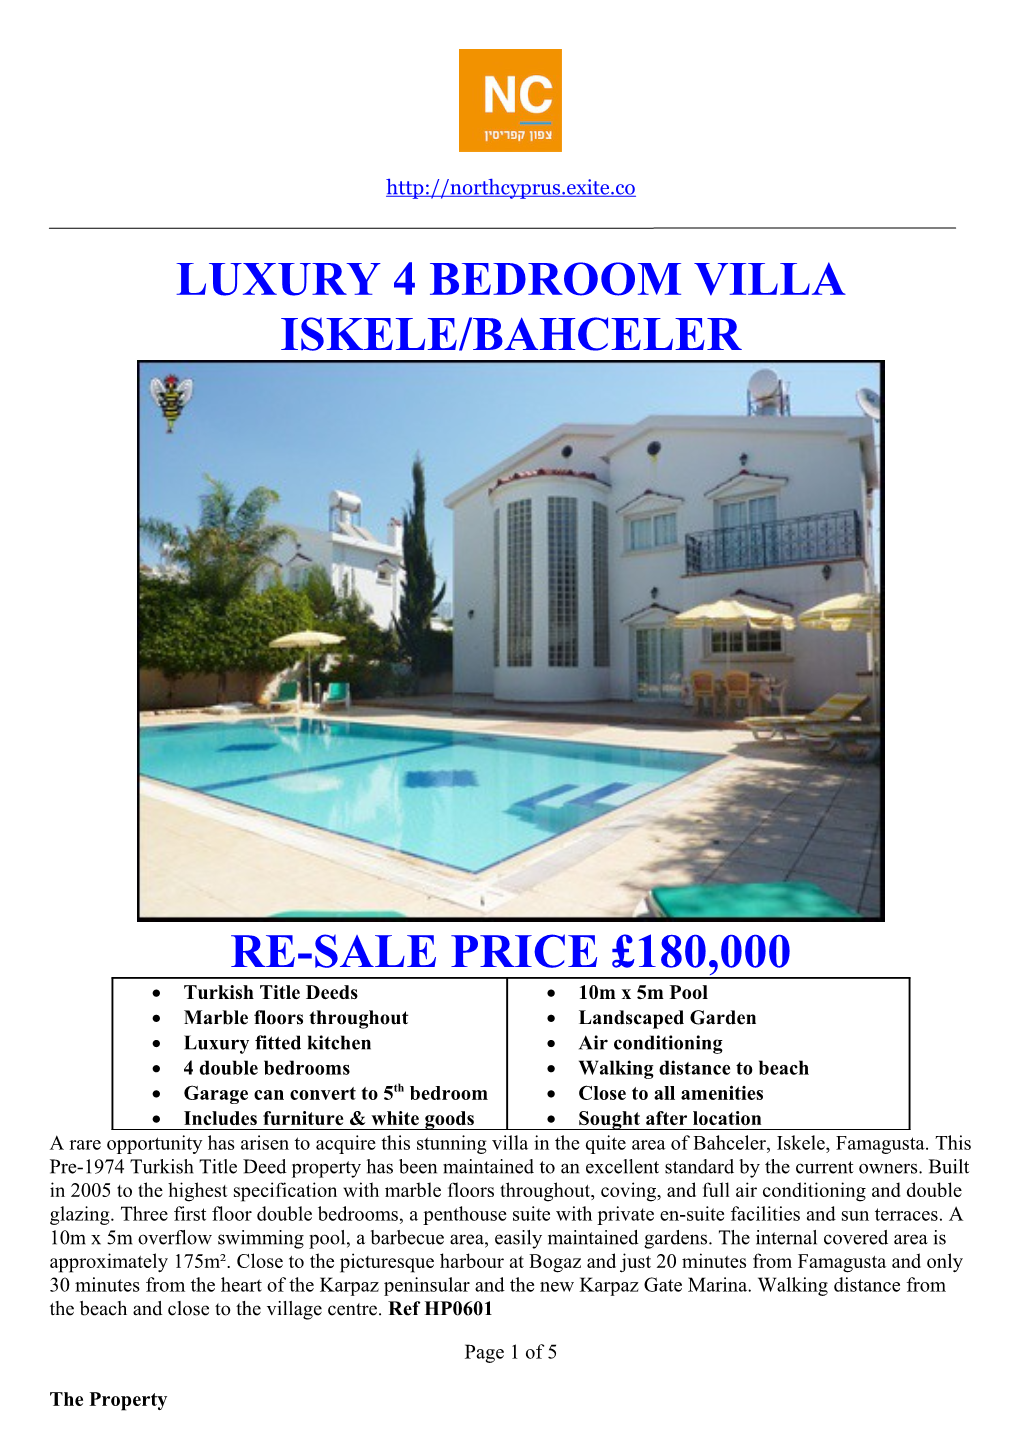 Luxury 4 Bedroom Villa